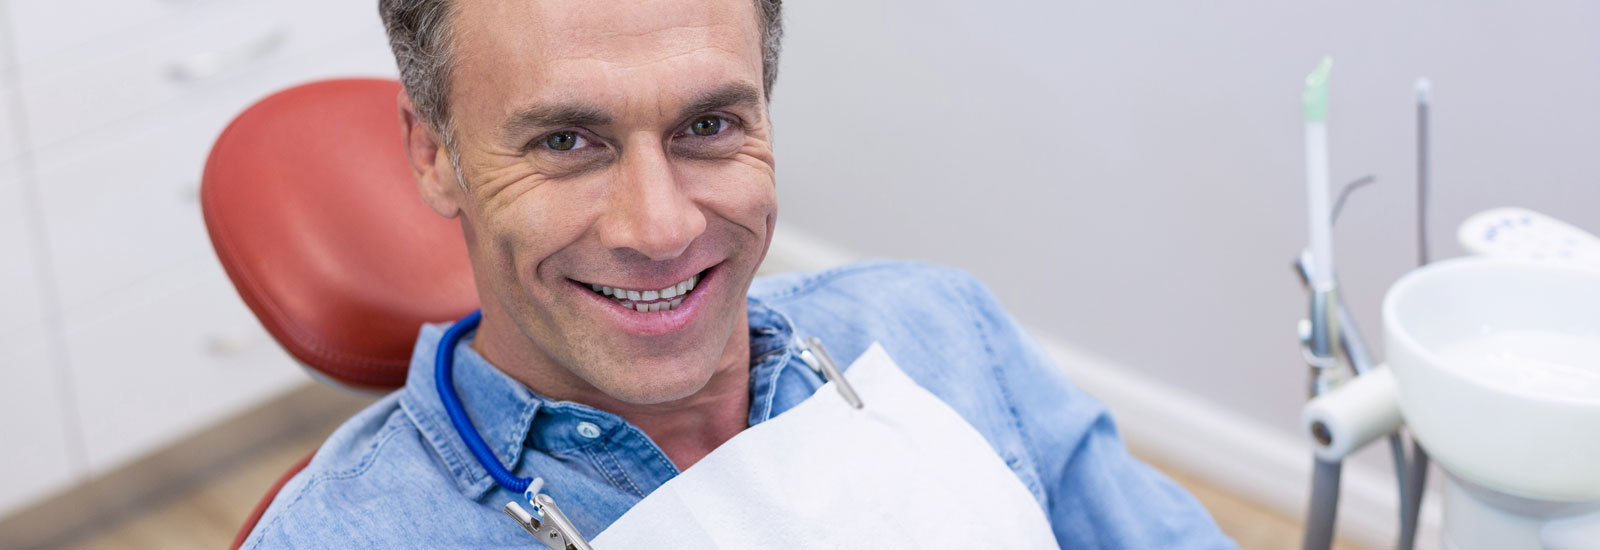 A man getting ready for dental implant